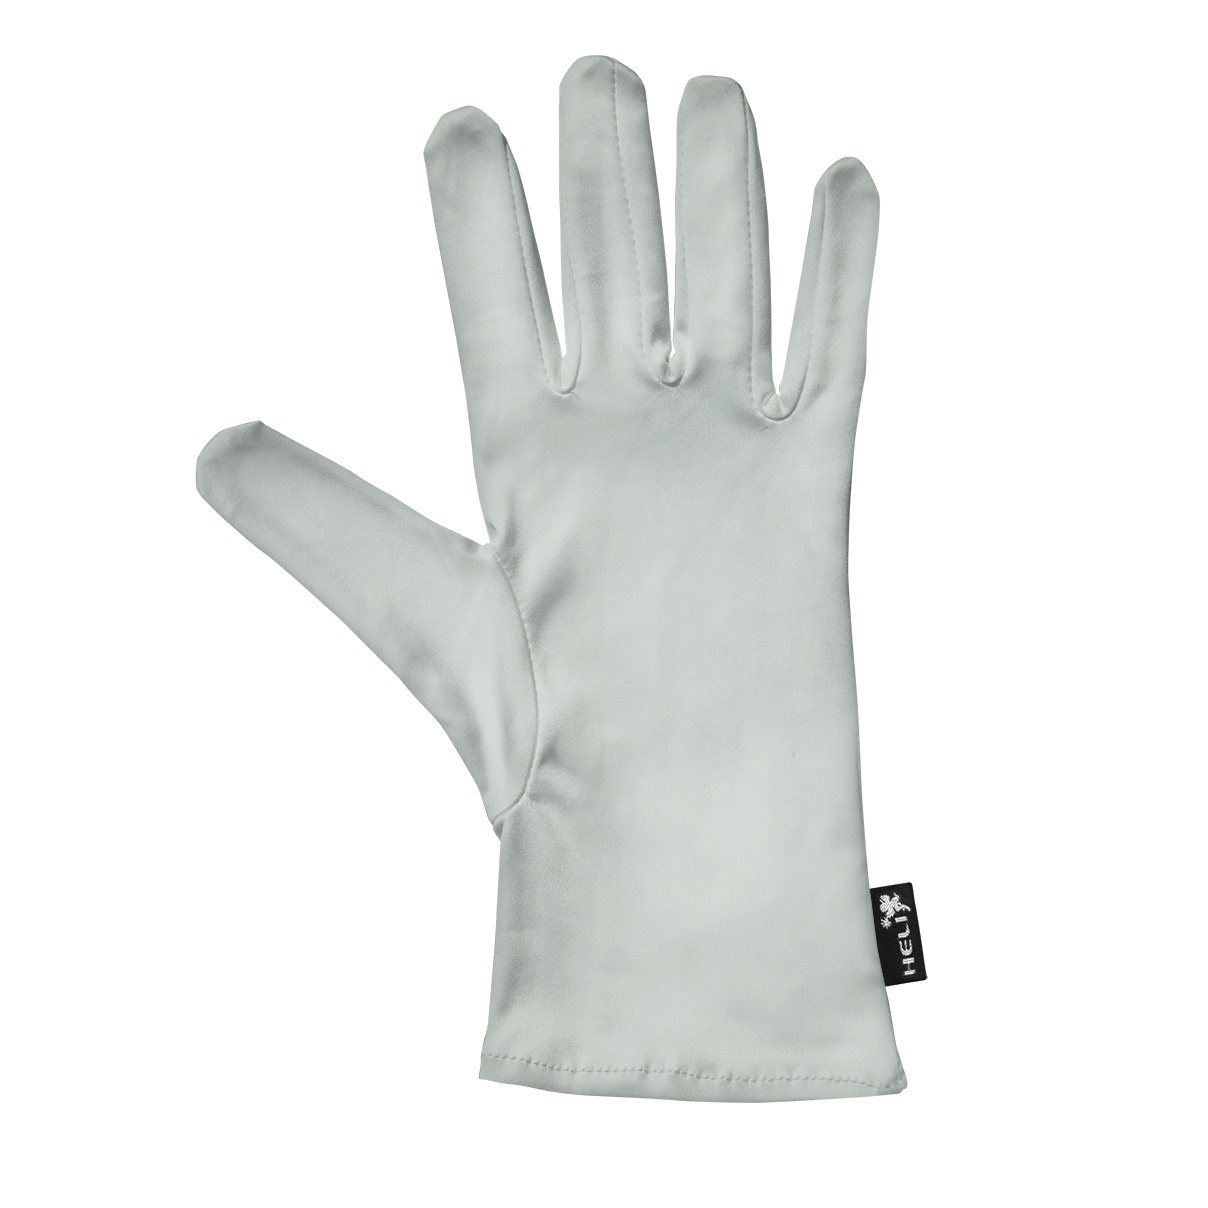 Heli presentation gloves, microfiber, silver-gray, size L, 1 pair